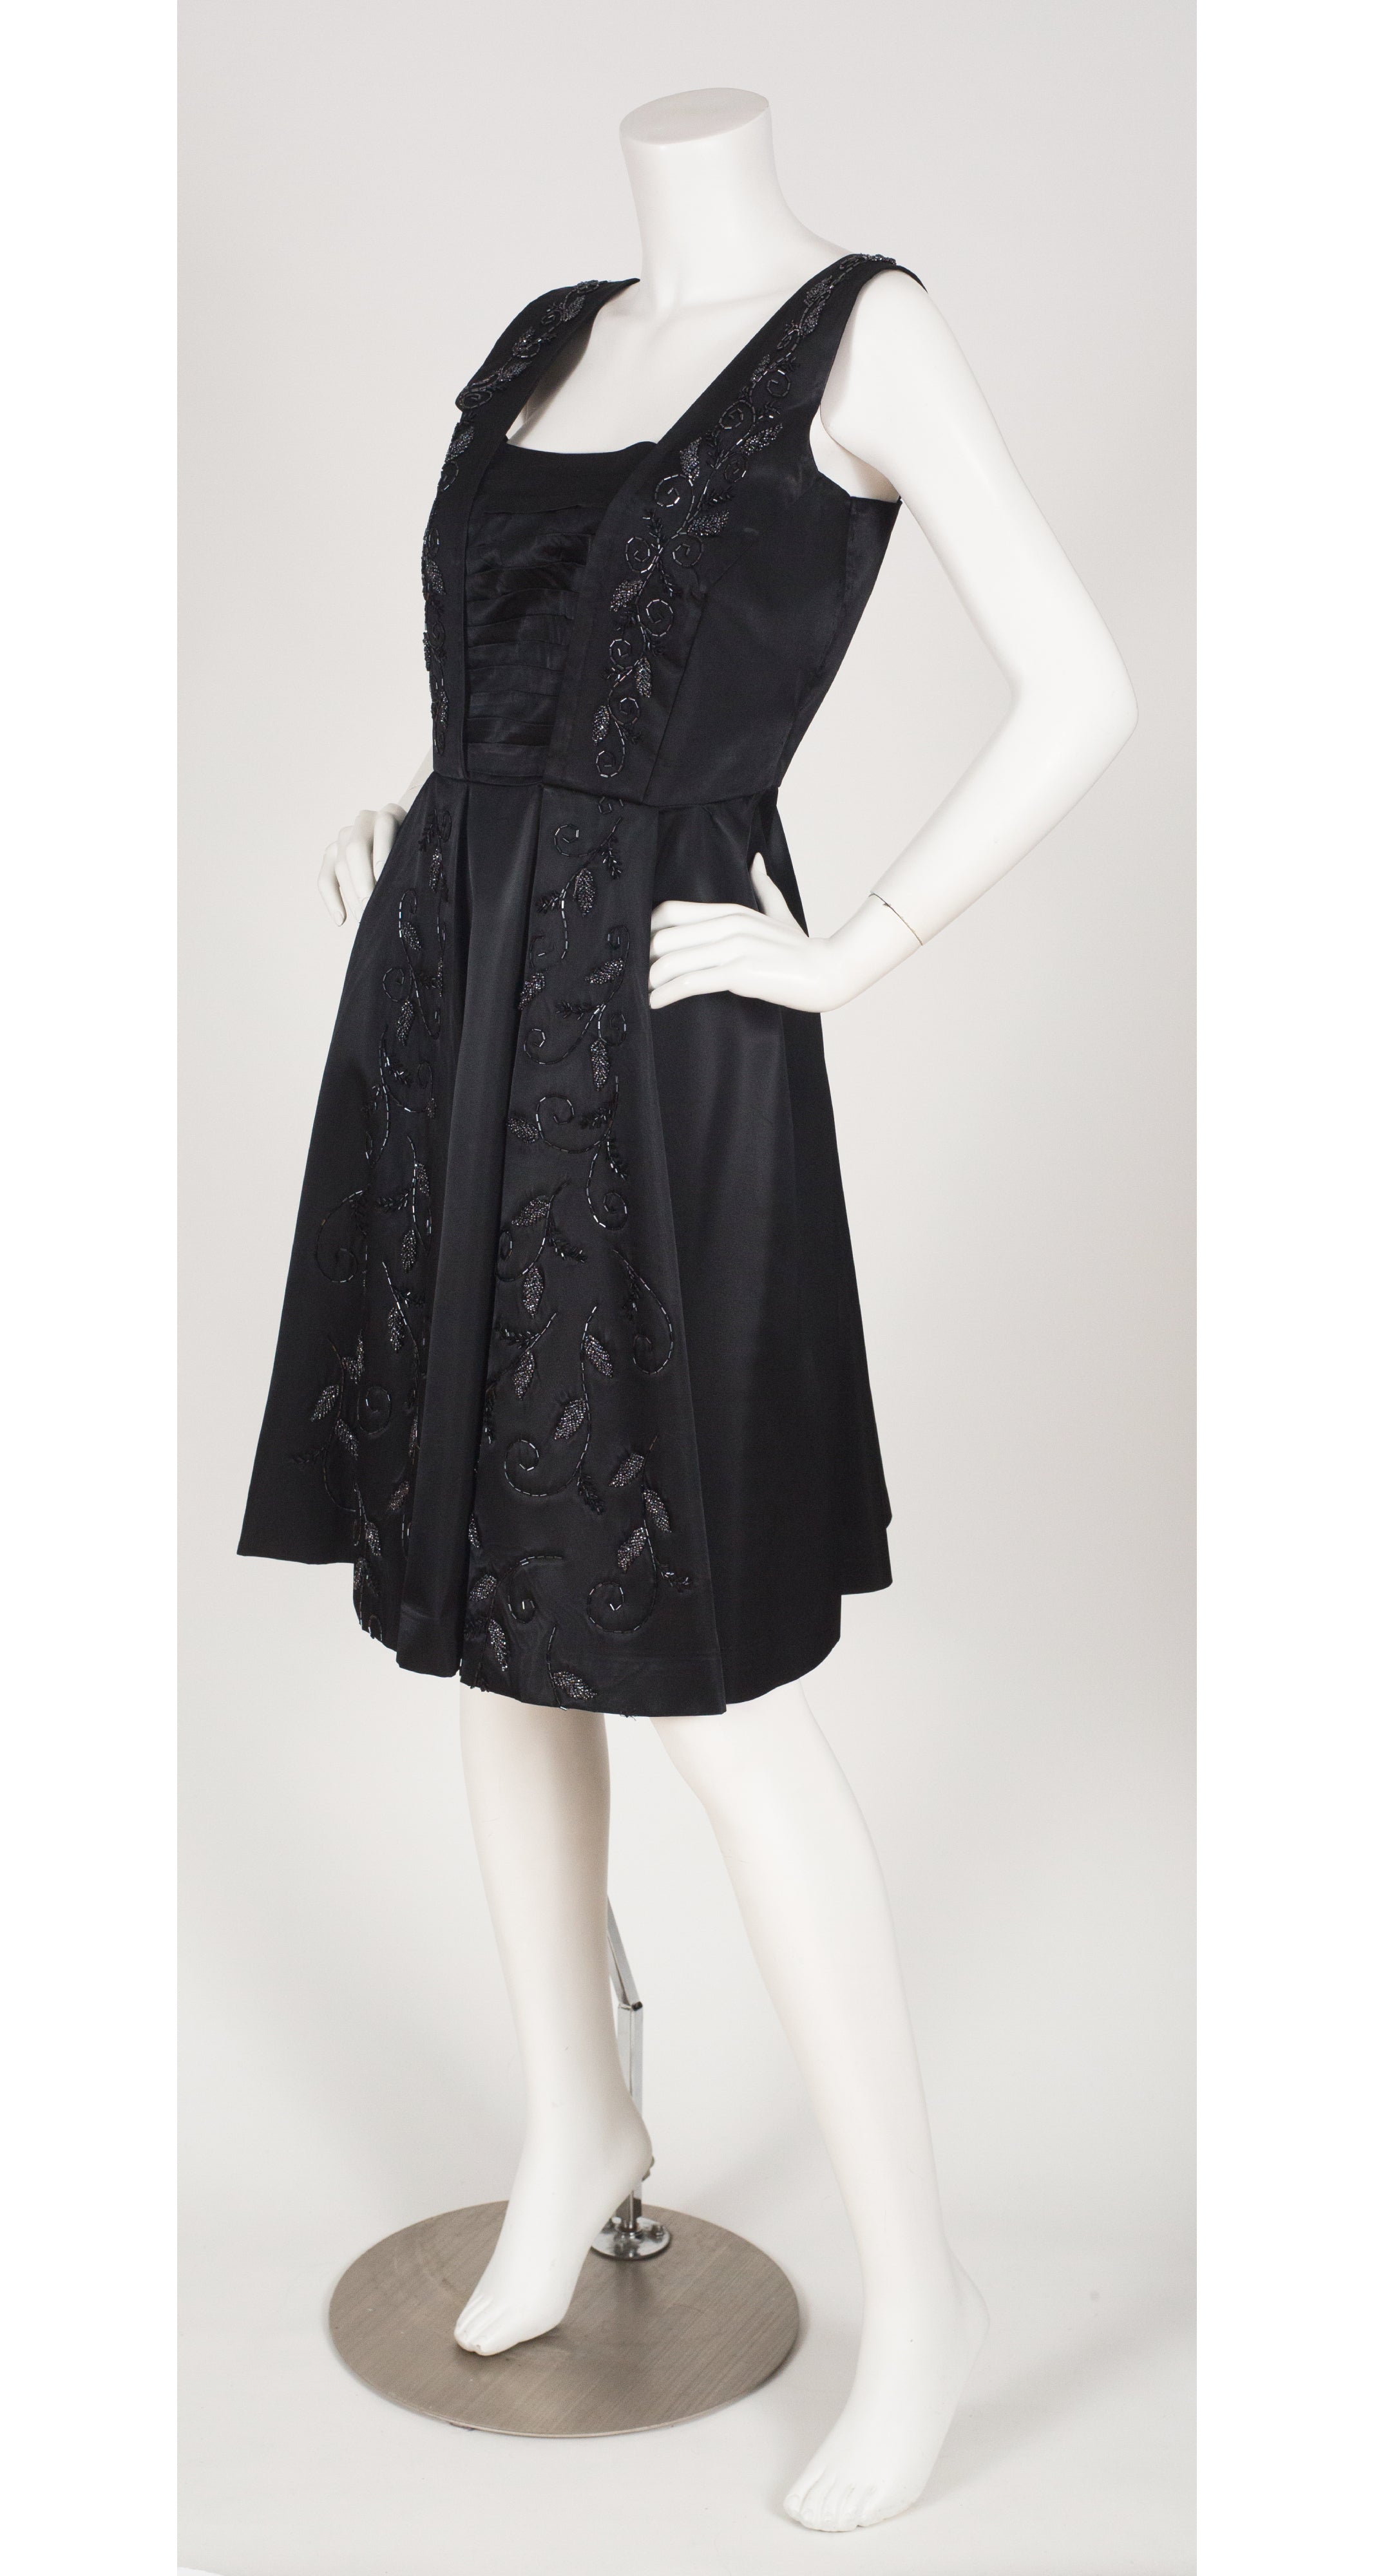 1960s Beaded Black Satin Cocktail Dress